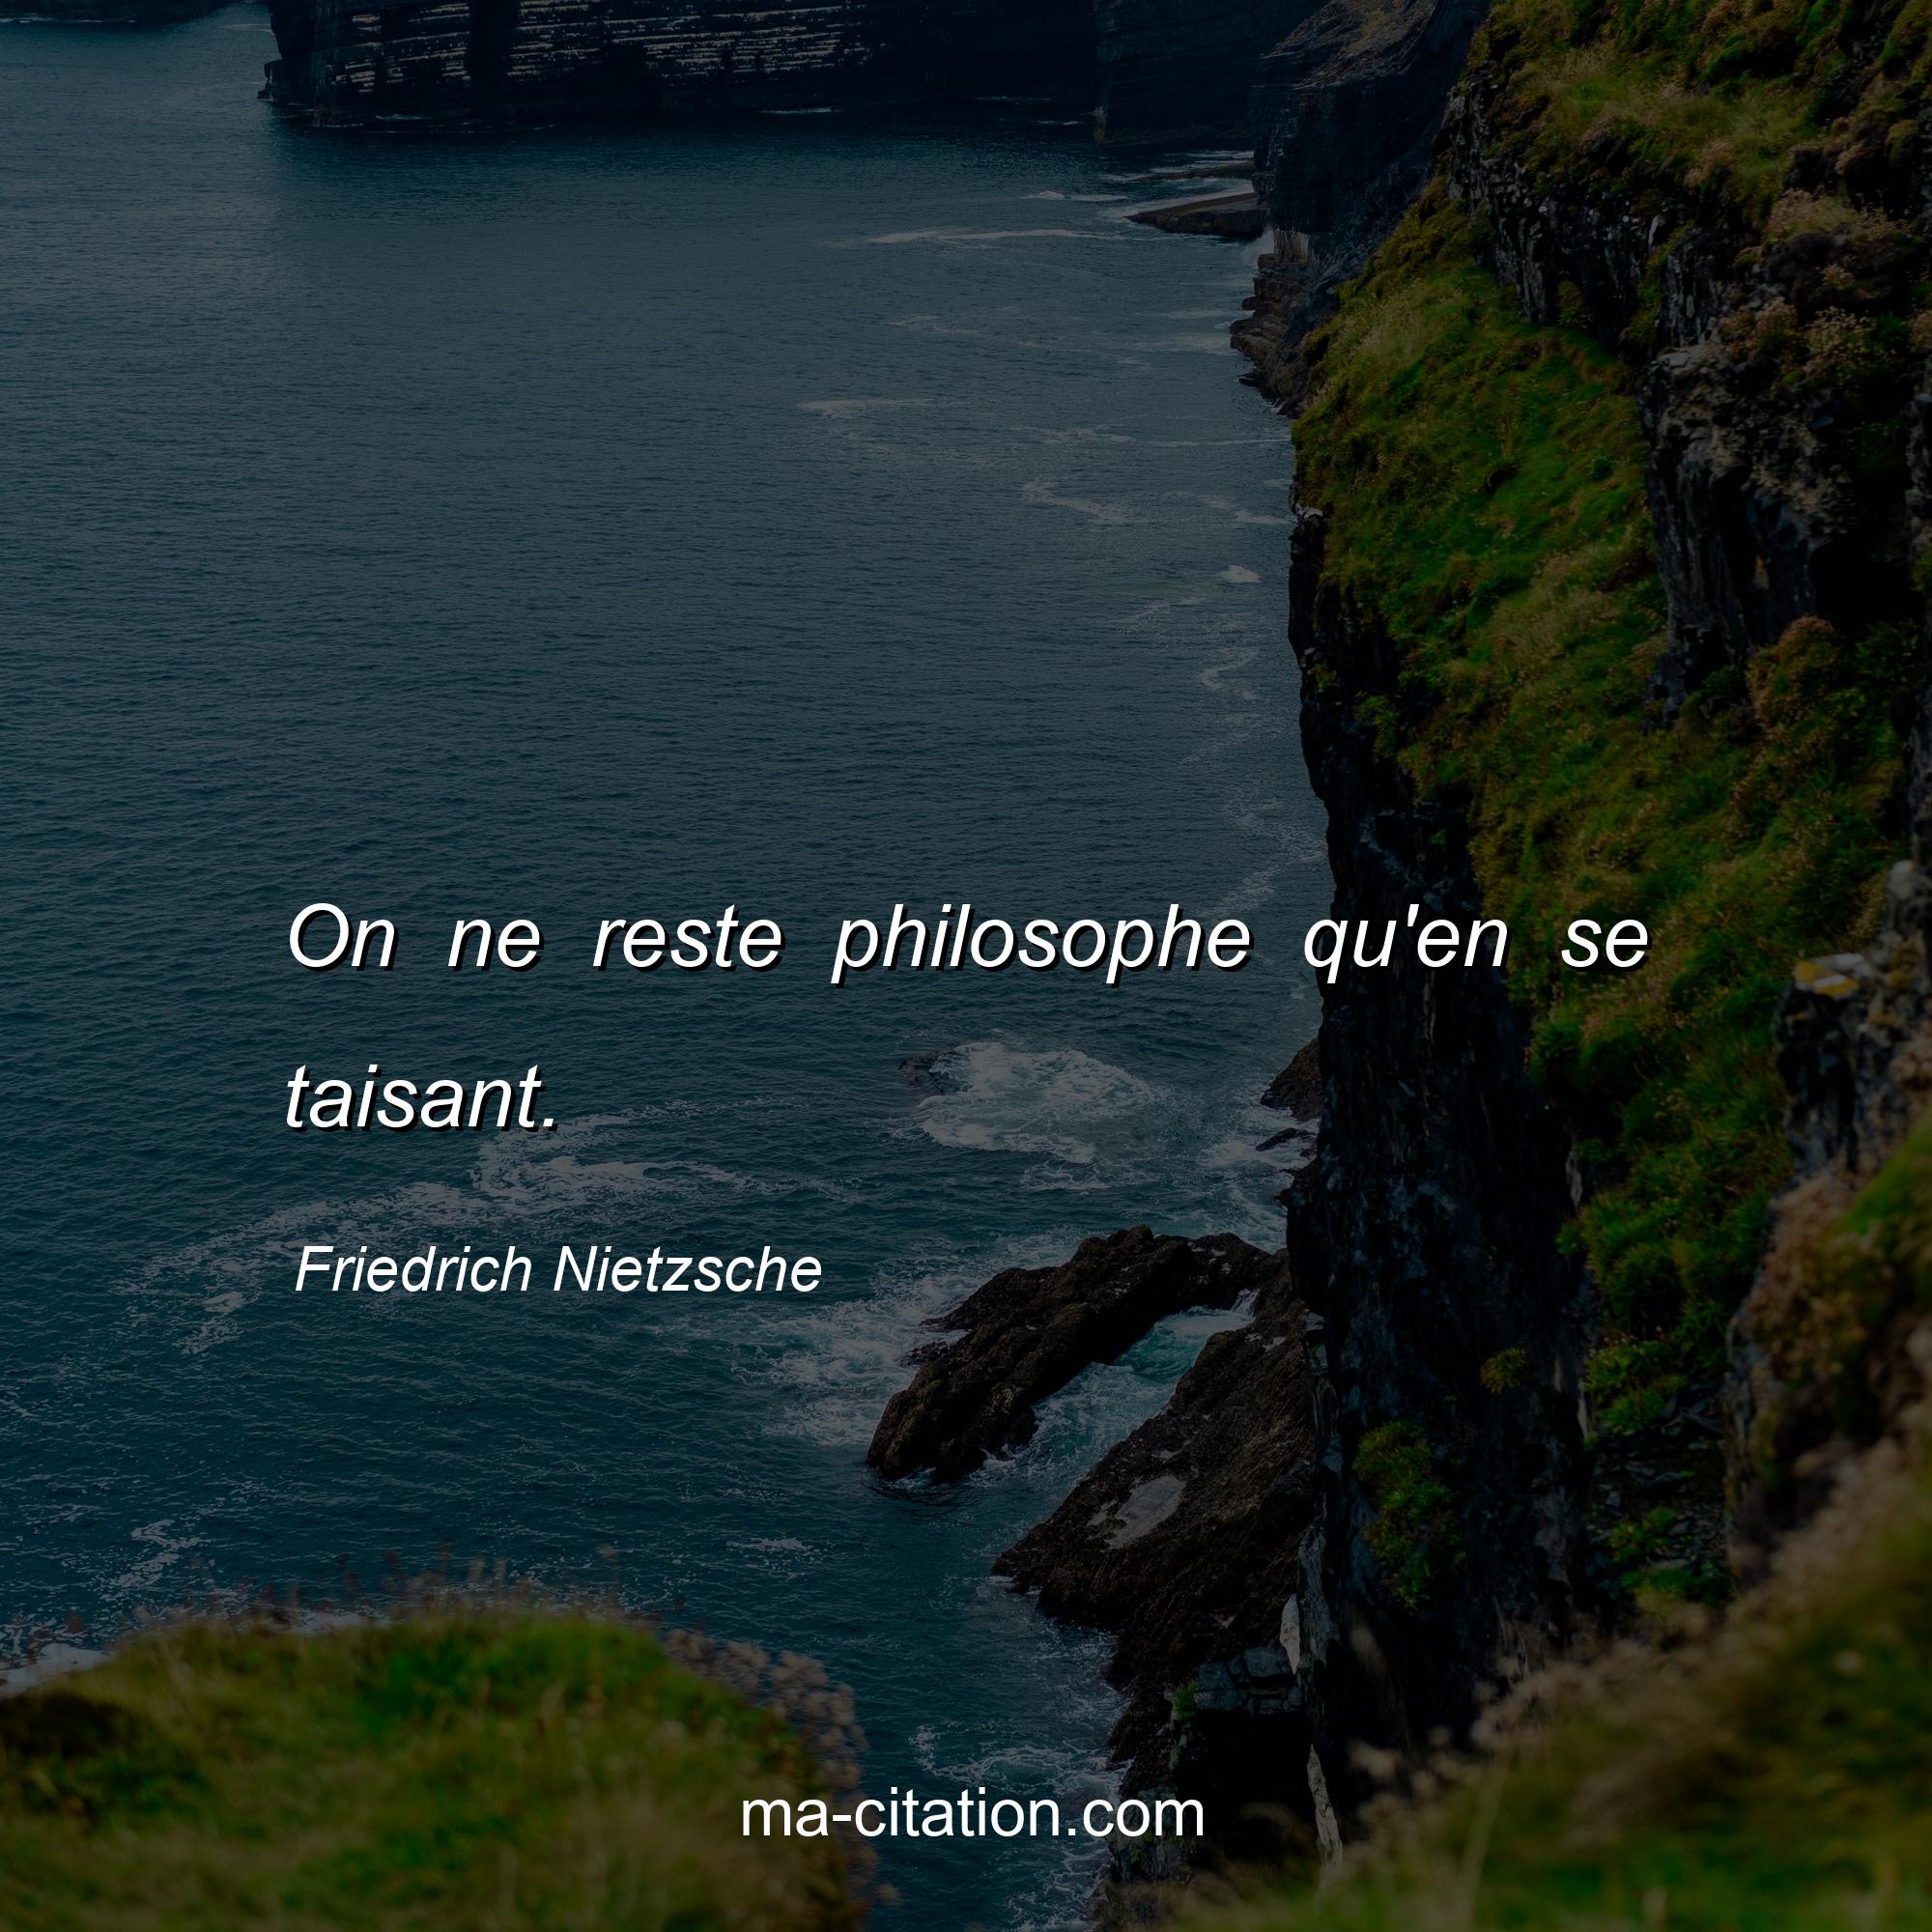 Friedrich Nietzsche : On ne reste philosophe qu'en se taisant.